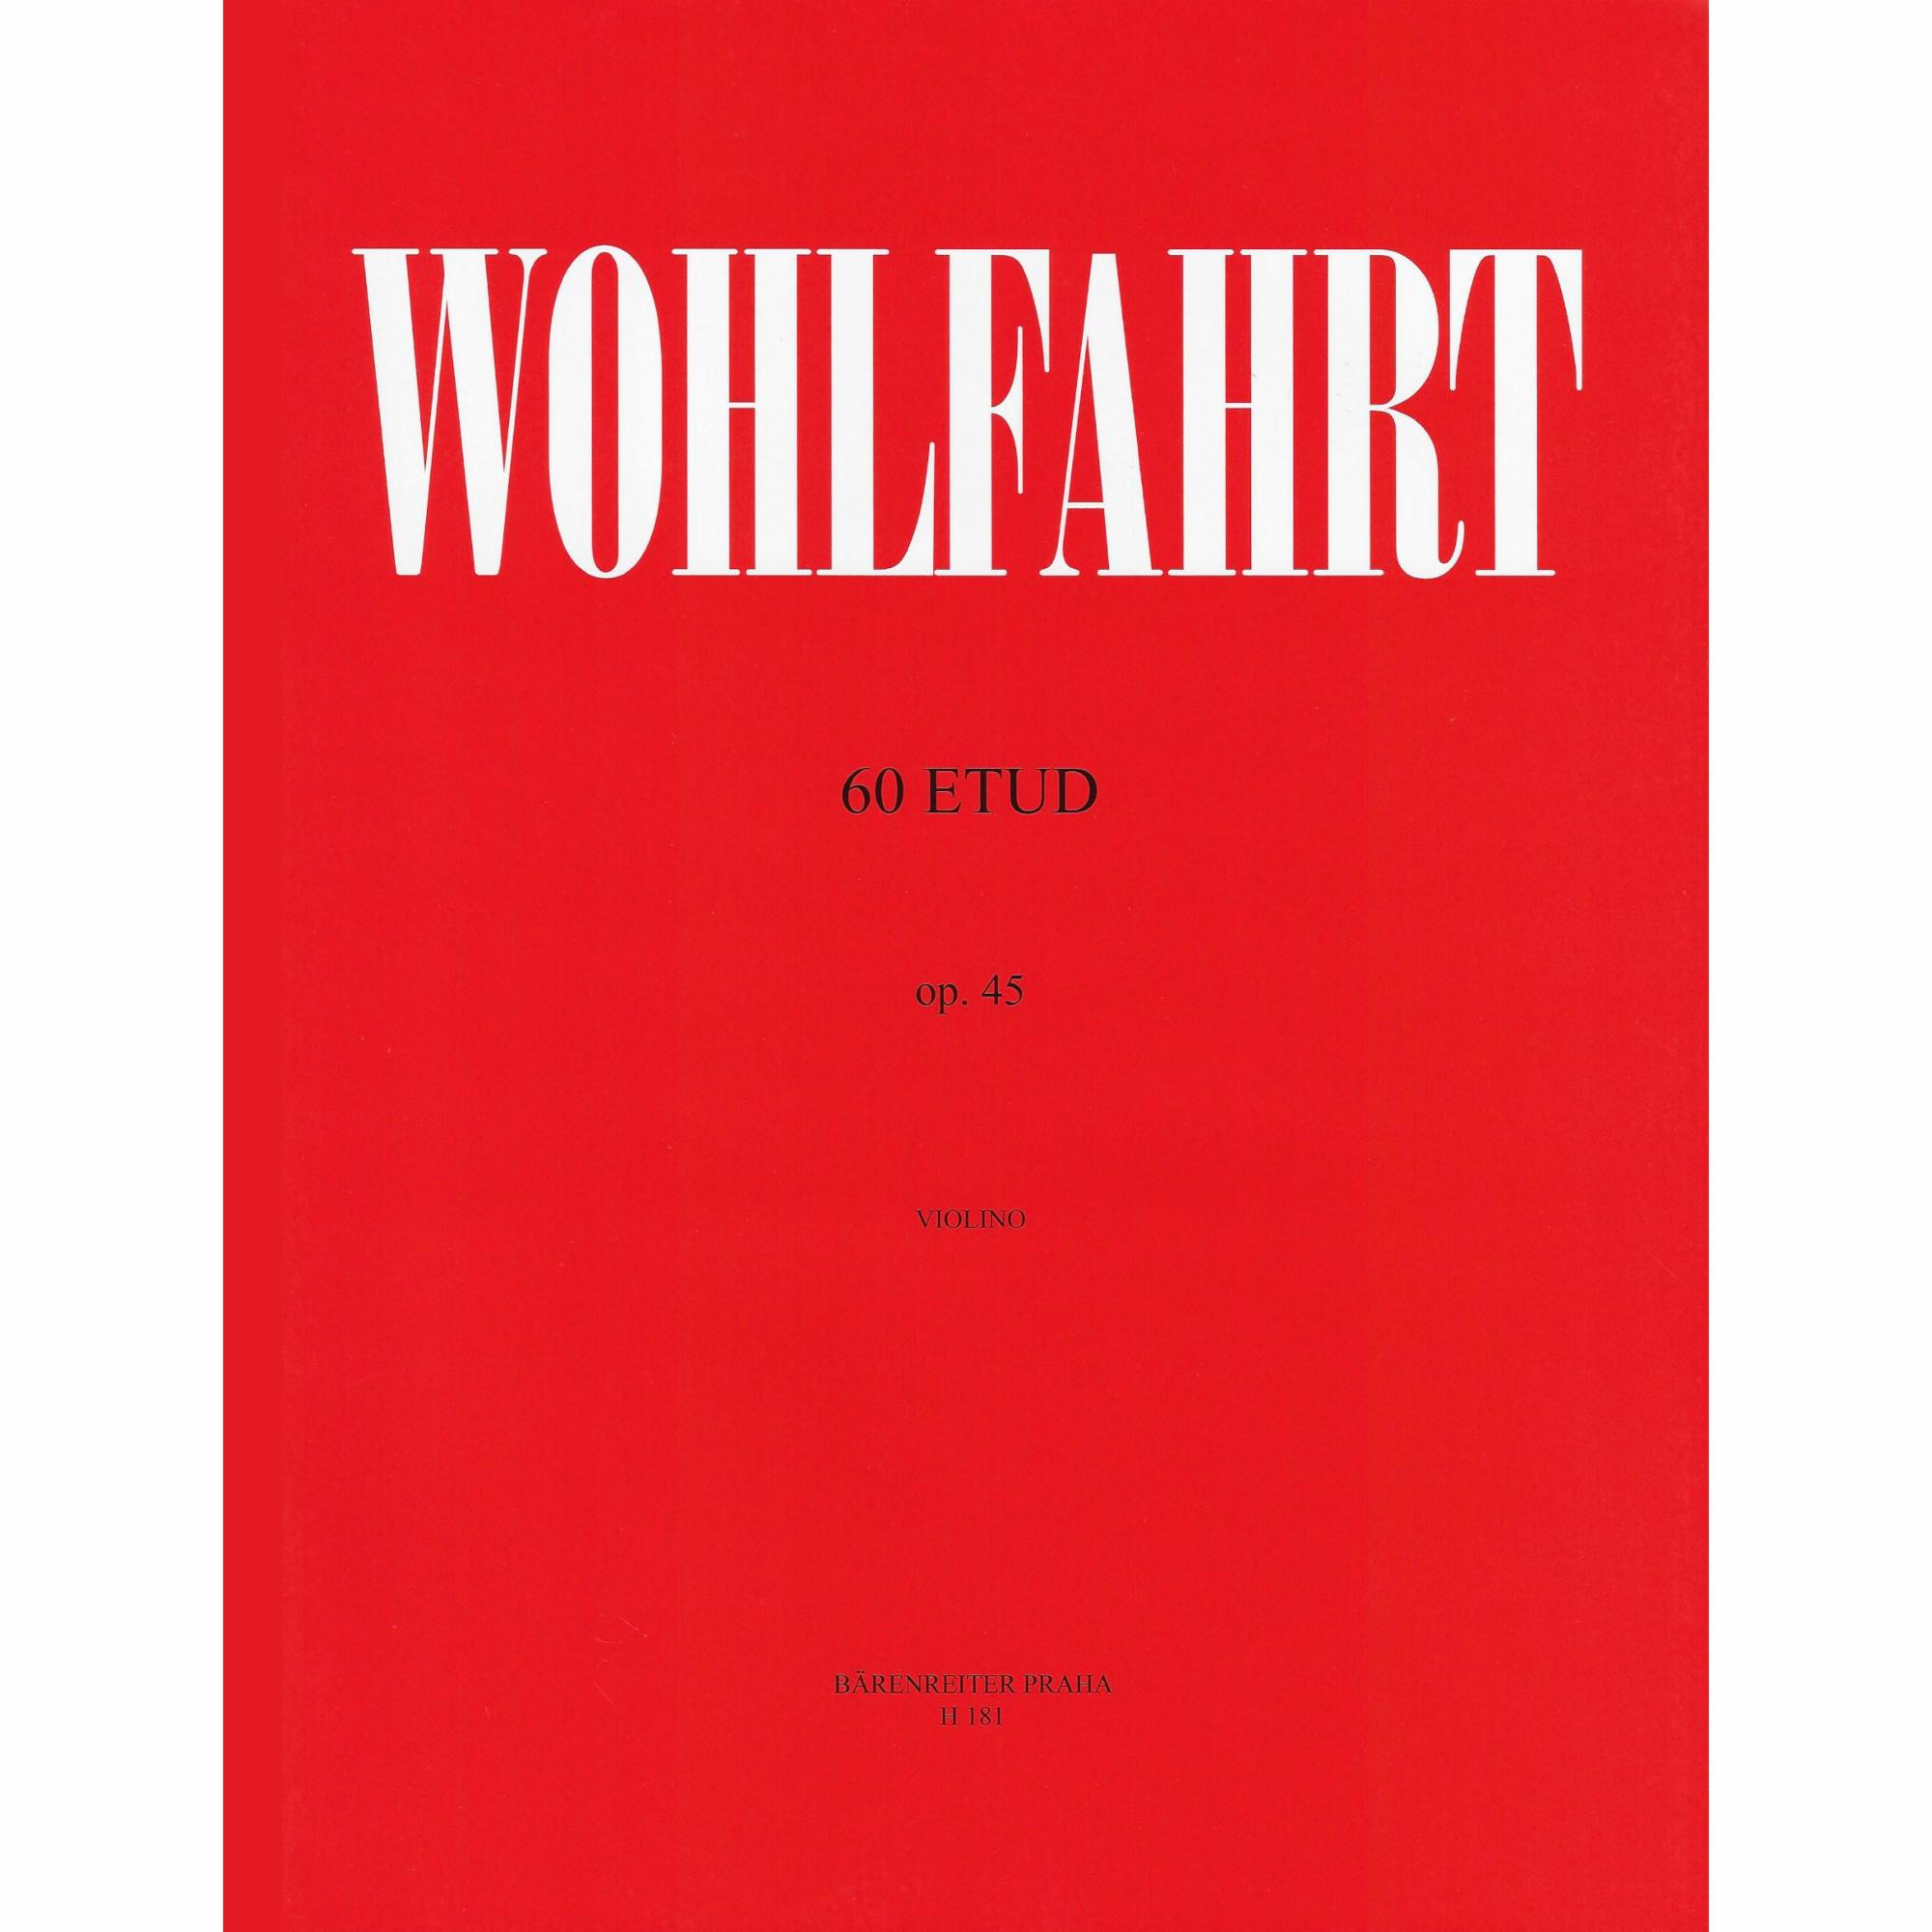 Wohlfahrt -- 60 Etudes, Op. 45 for Violin